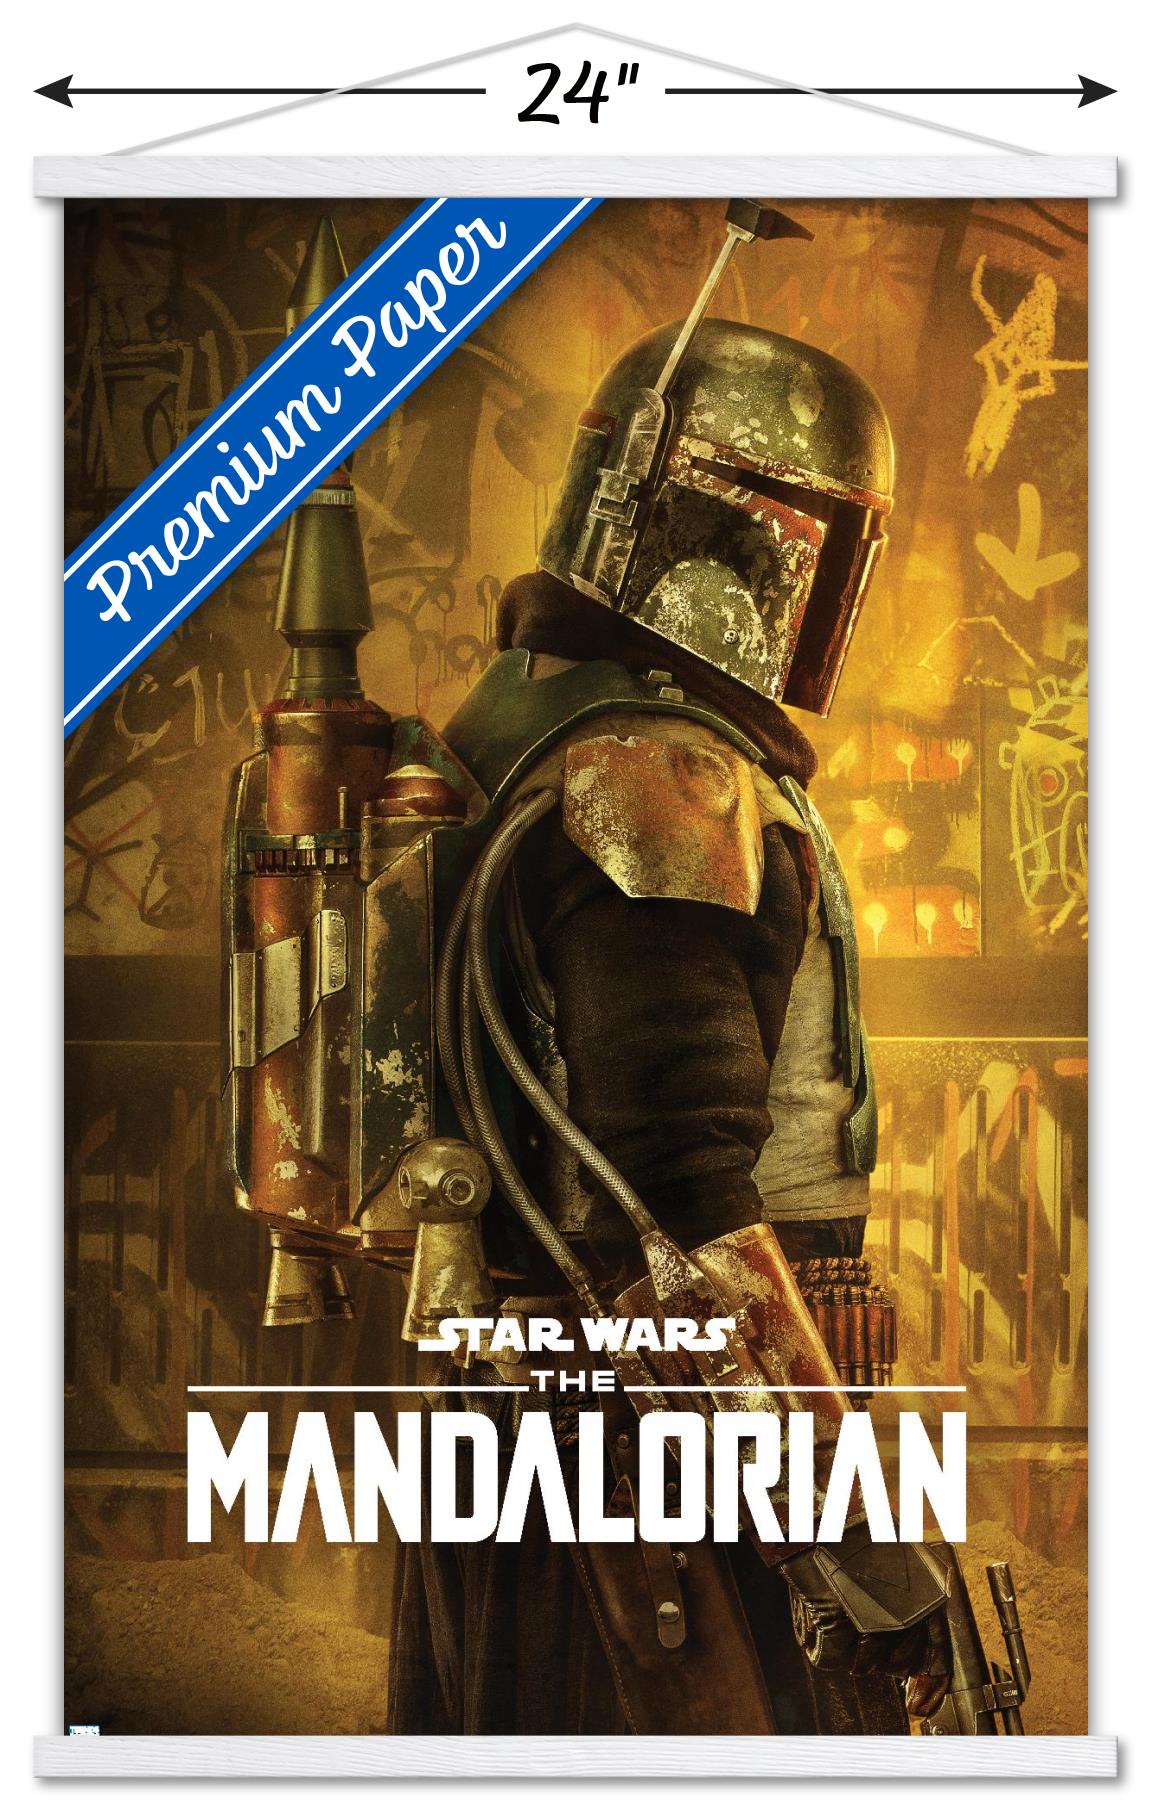 Star Wars: The Mandalorian Season 2 - Boba Fett 24" x 40" Poster by Trends International - image 3 of 3